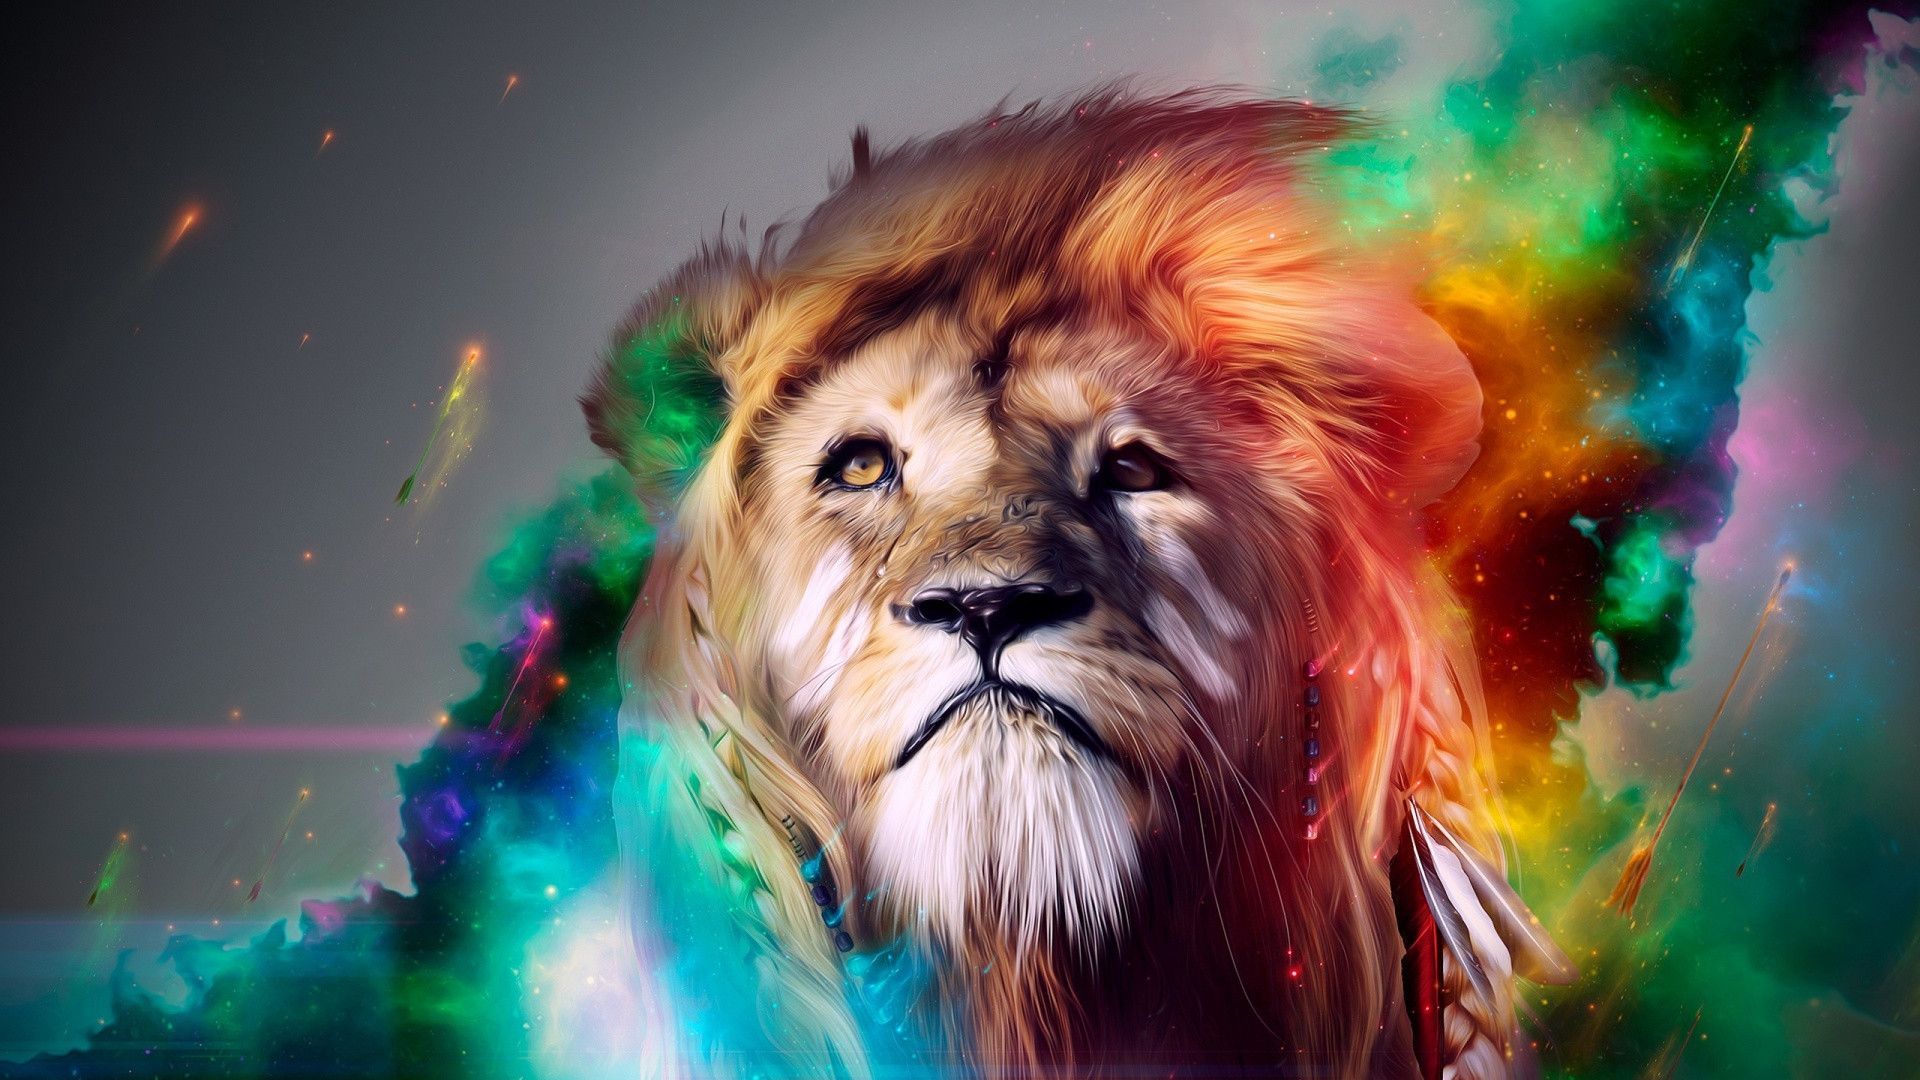 HD. 1920 x 1080. Rainbow space lion. Aslanlar, Aslan, Sanat